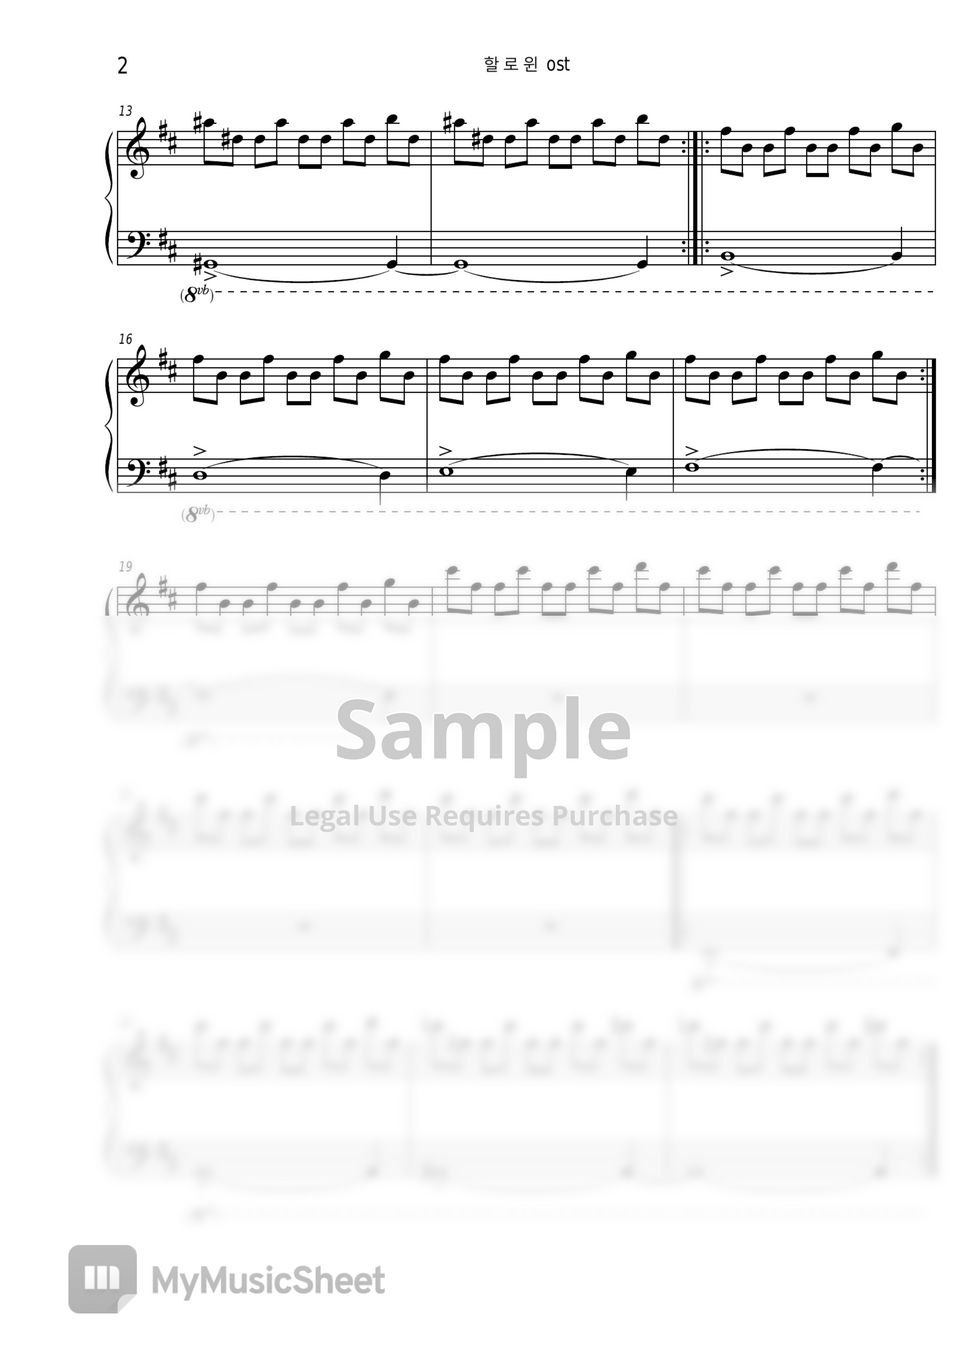 John Carpenter - HALLOWEEN Theme(할로윈 영화 주제곡) (easy sheet) by Pianist Jin